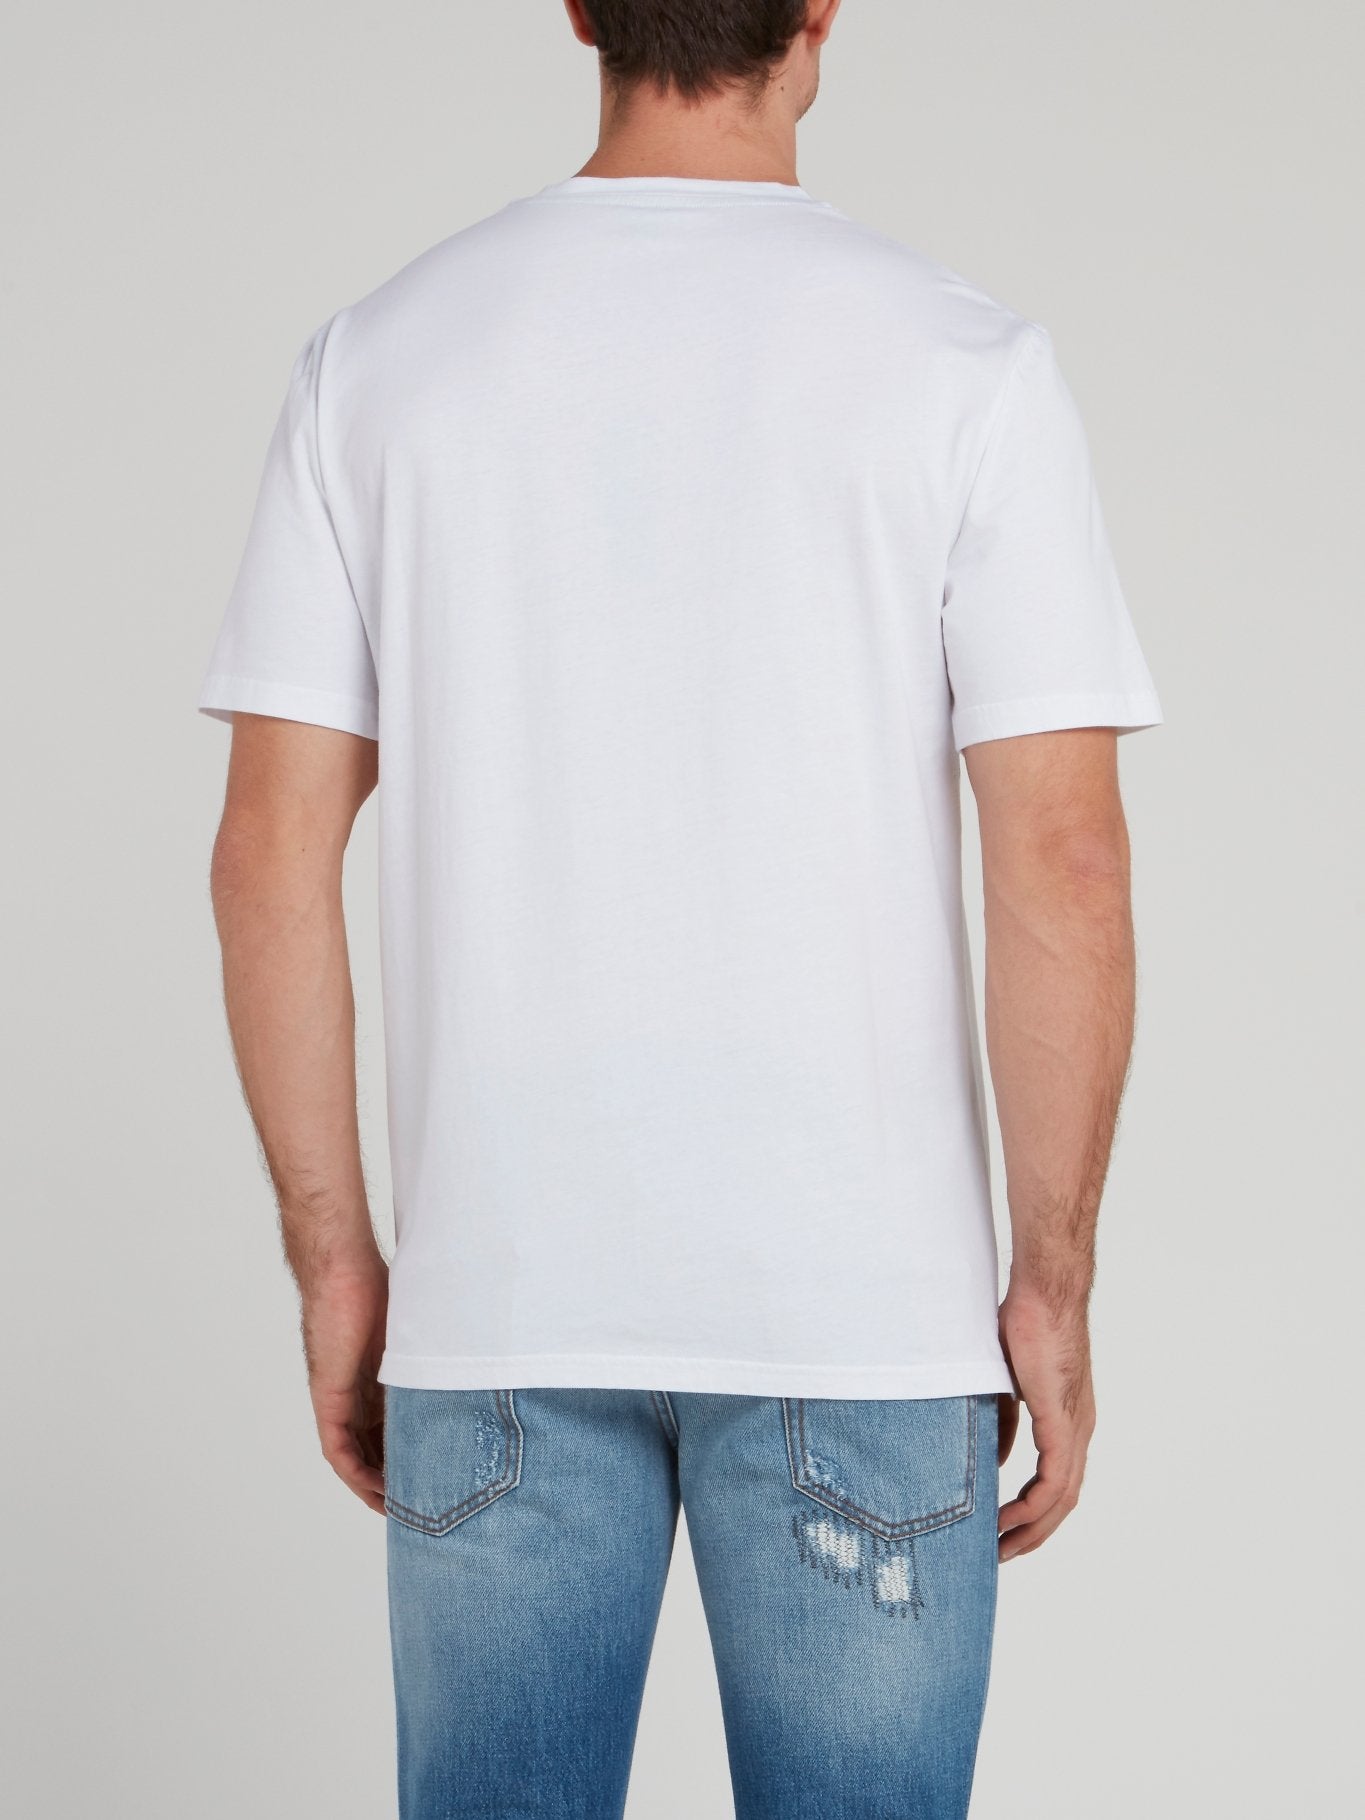 White Graphic Print Cotton T-Shirt